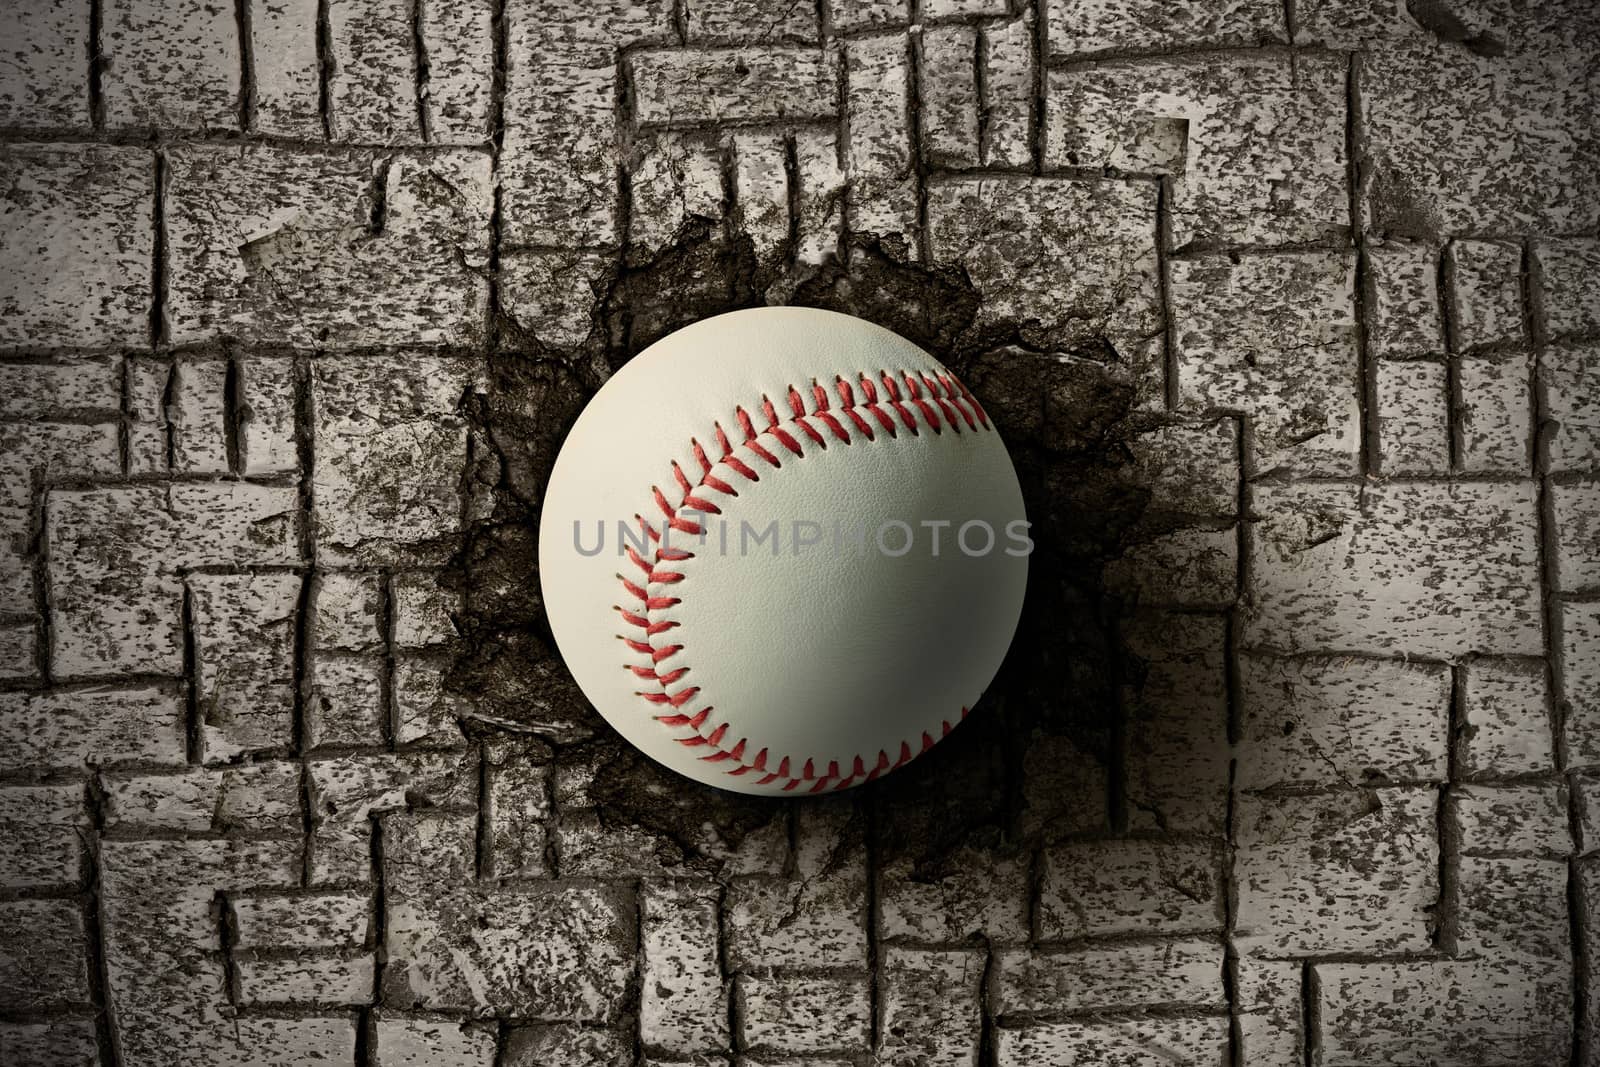 baseball ball embedded in a brick wall